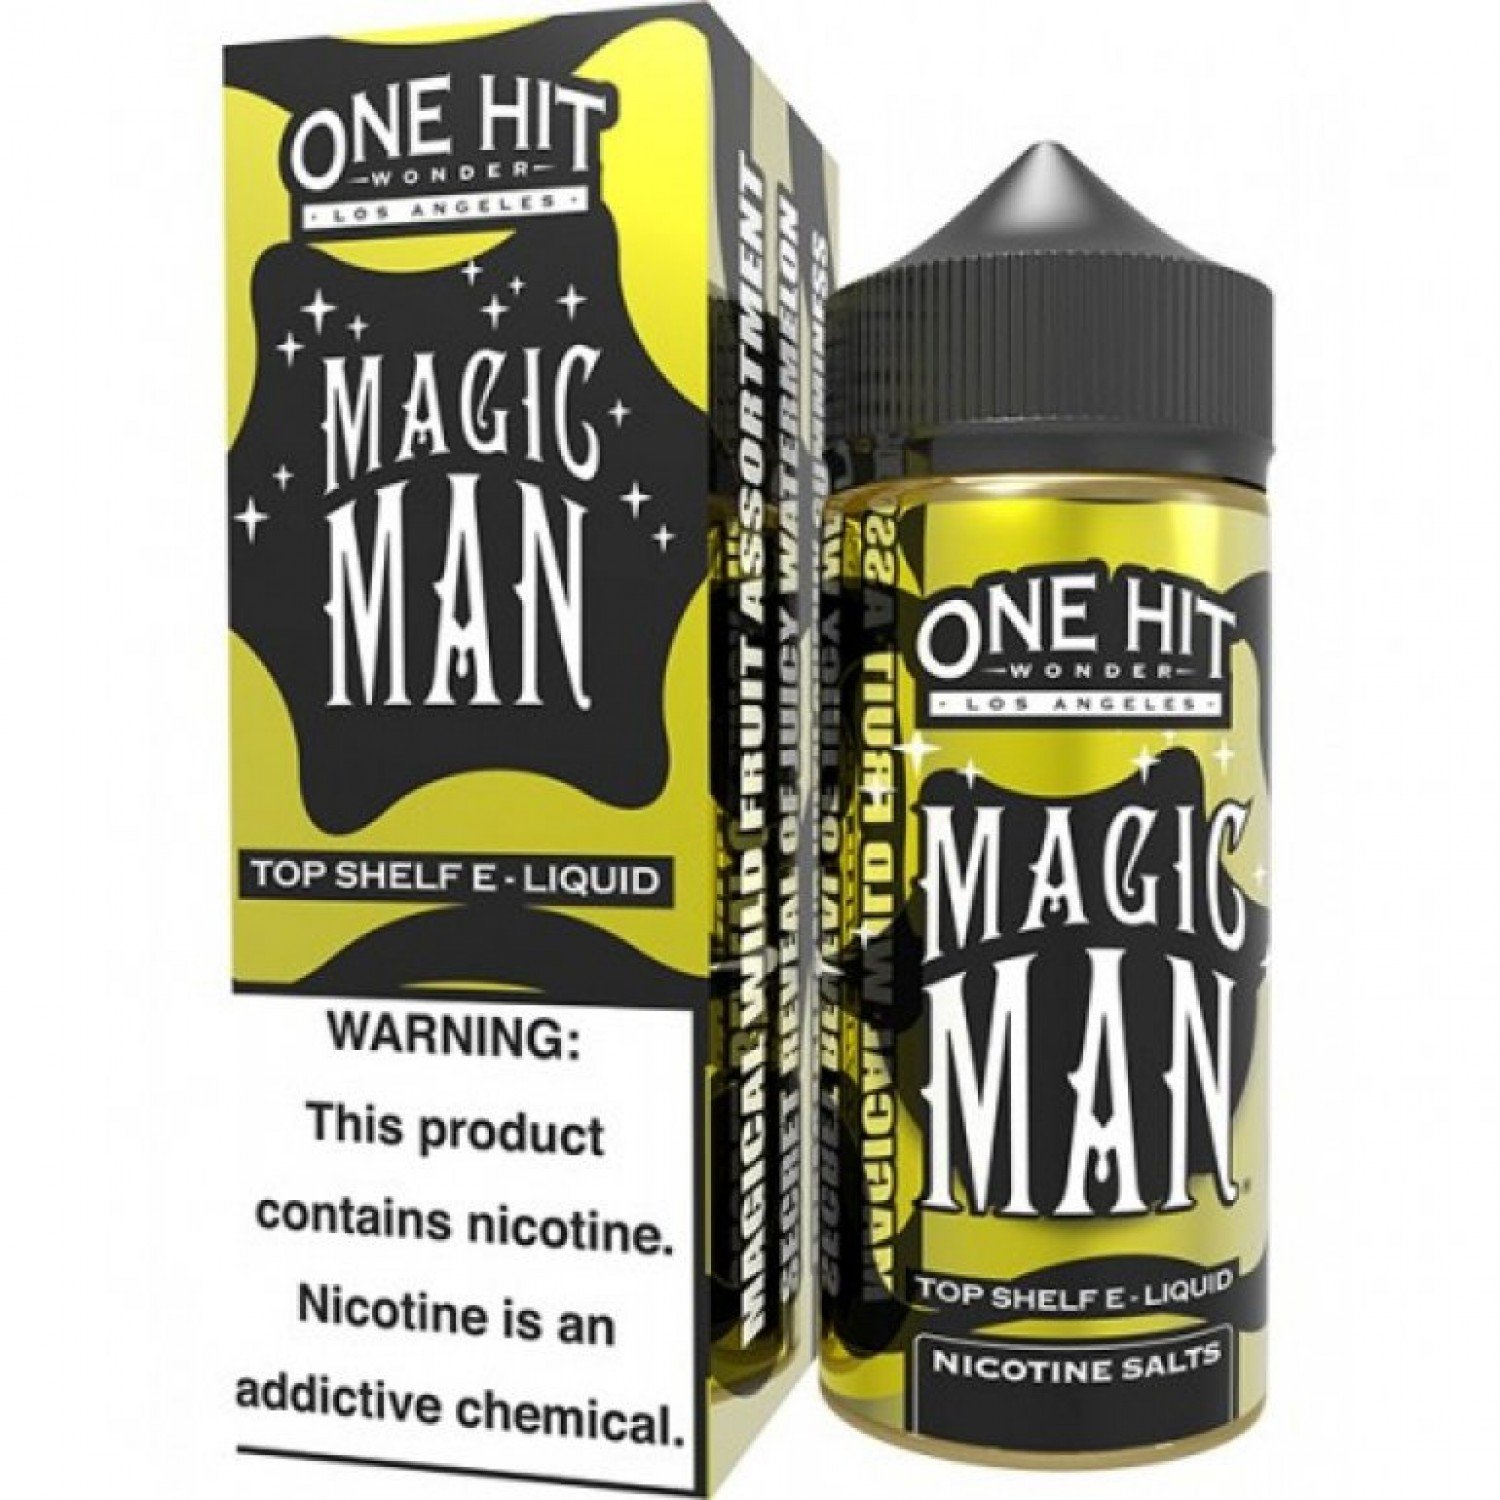 One Hit Wonder - Mini Magic Man 100 ml Premium Likit